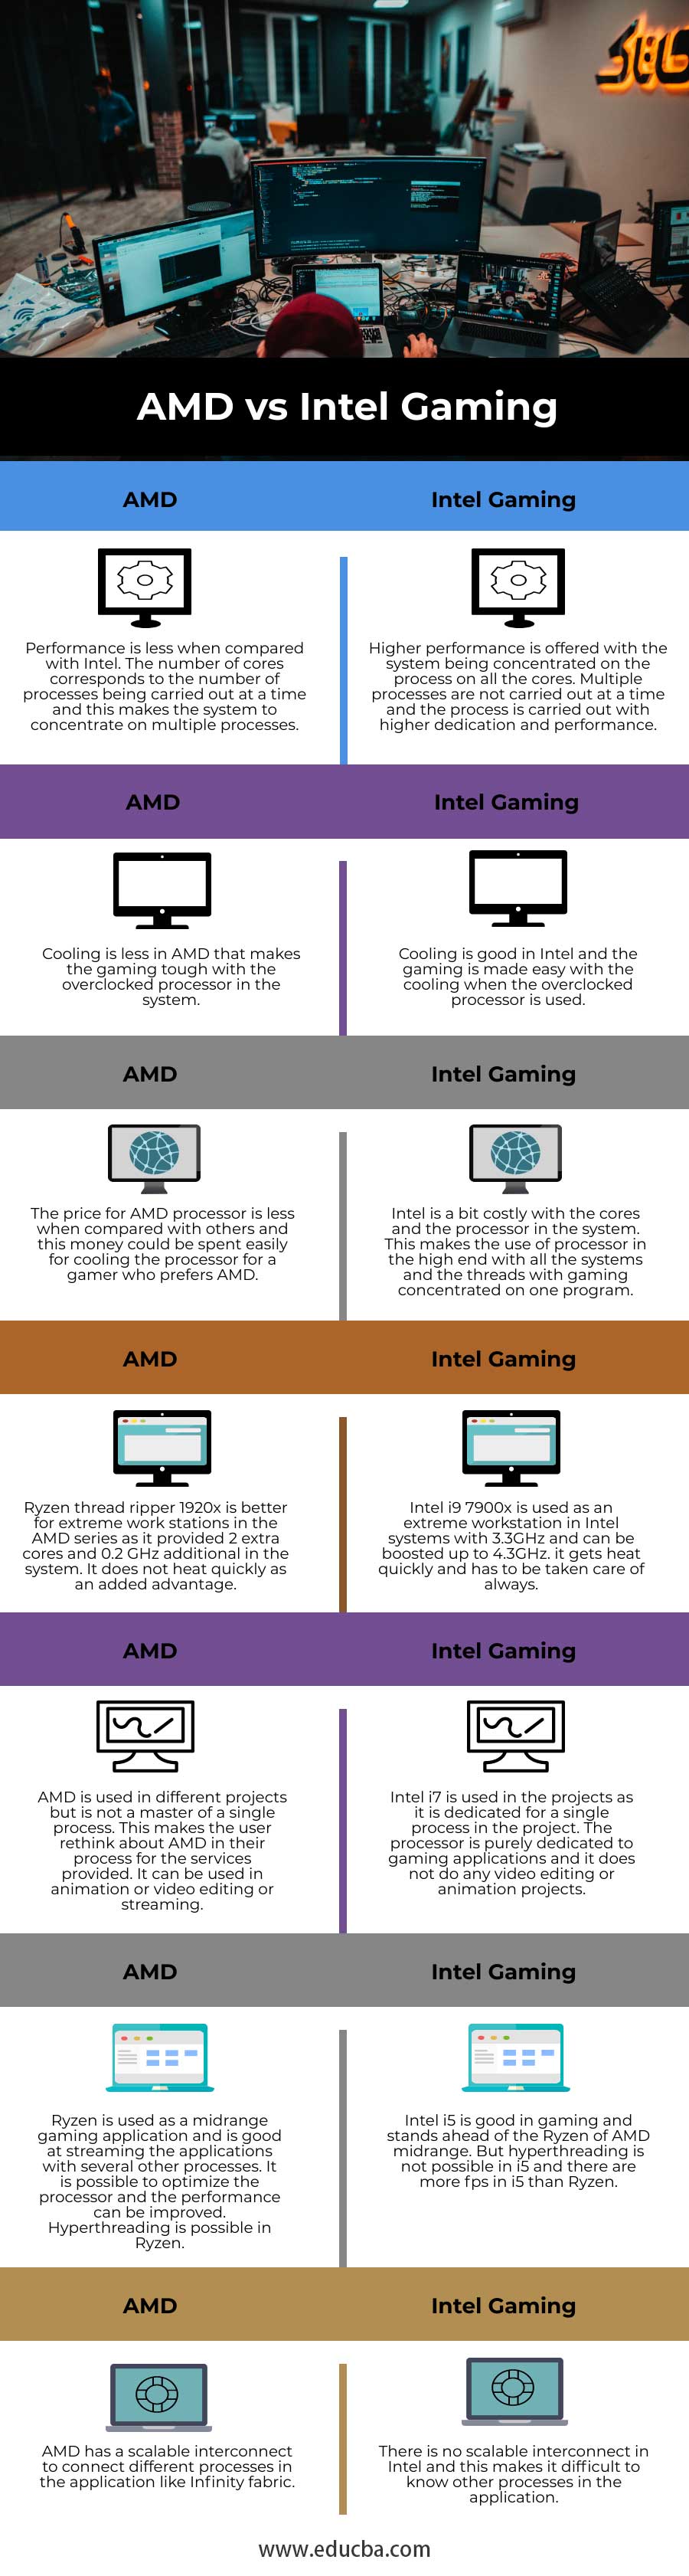 AMD-vs-Intel-Gaming-info